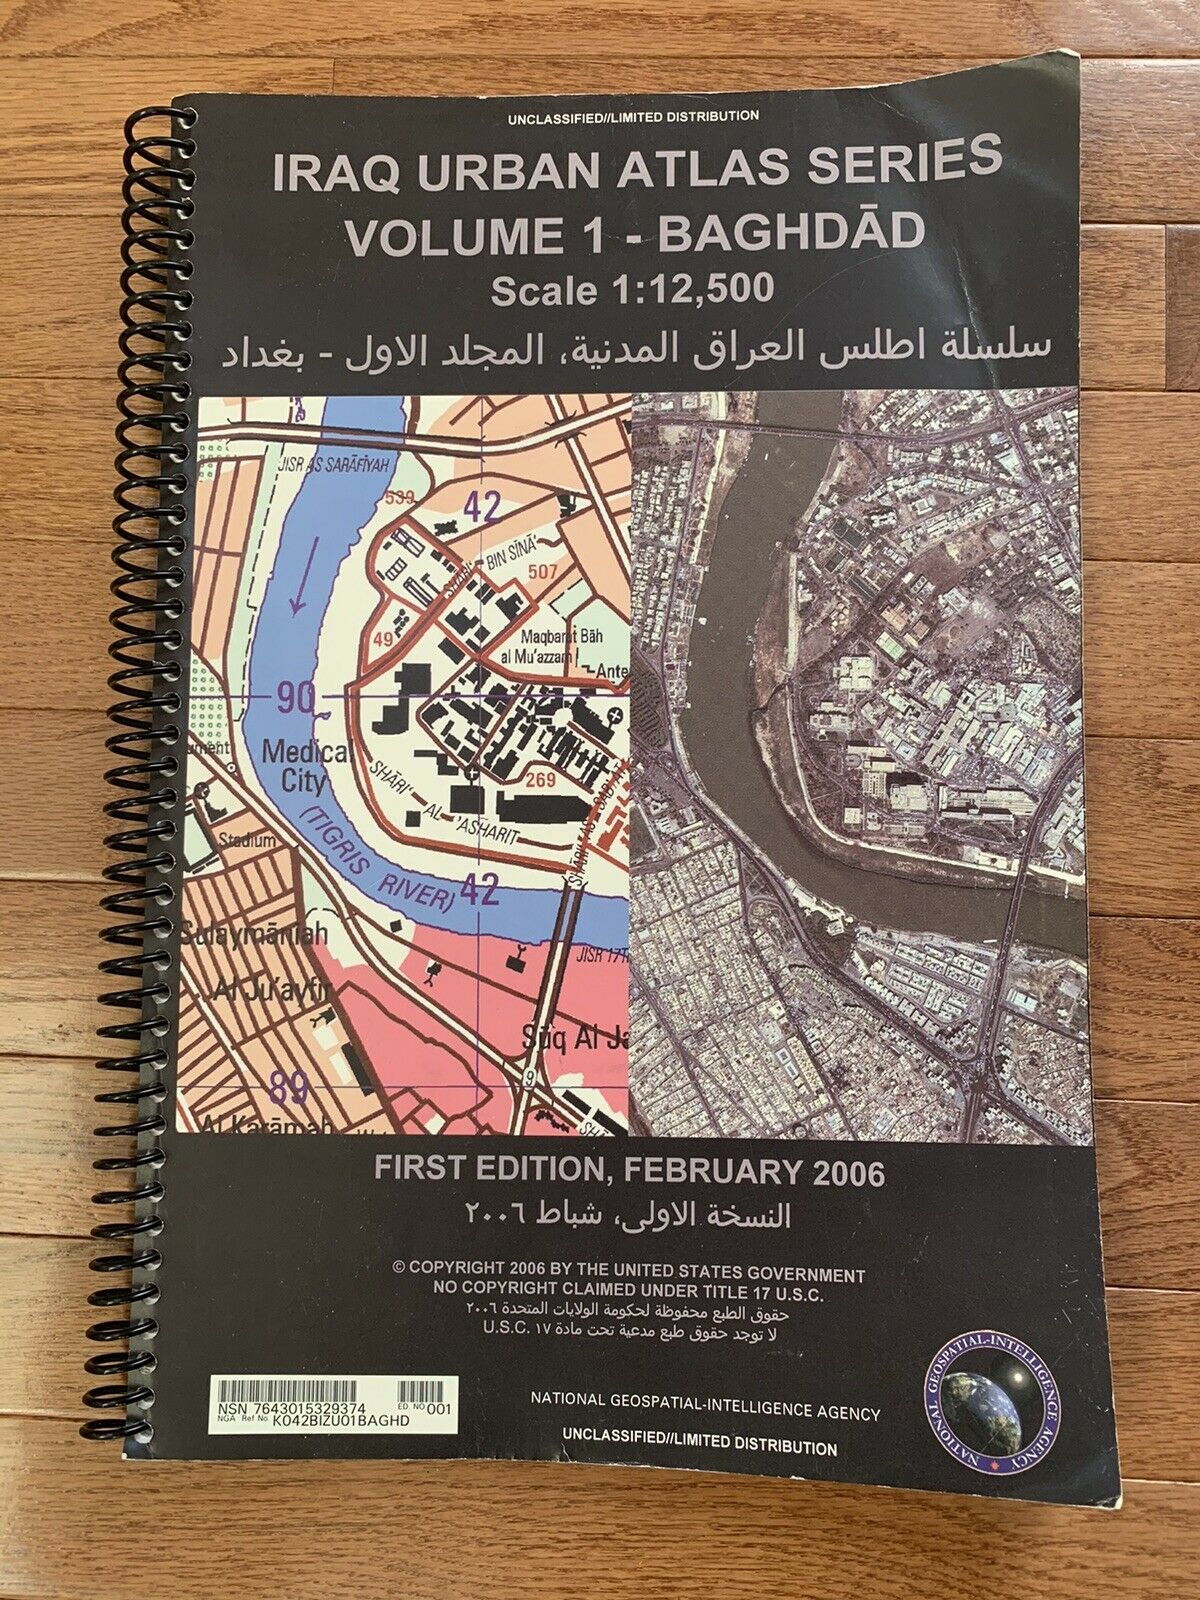 2006 Iraq Urban Atlas Series Volume 1 - Baghdad, Scale 1:12,500